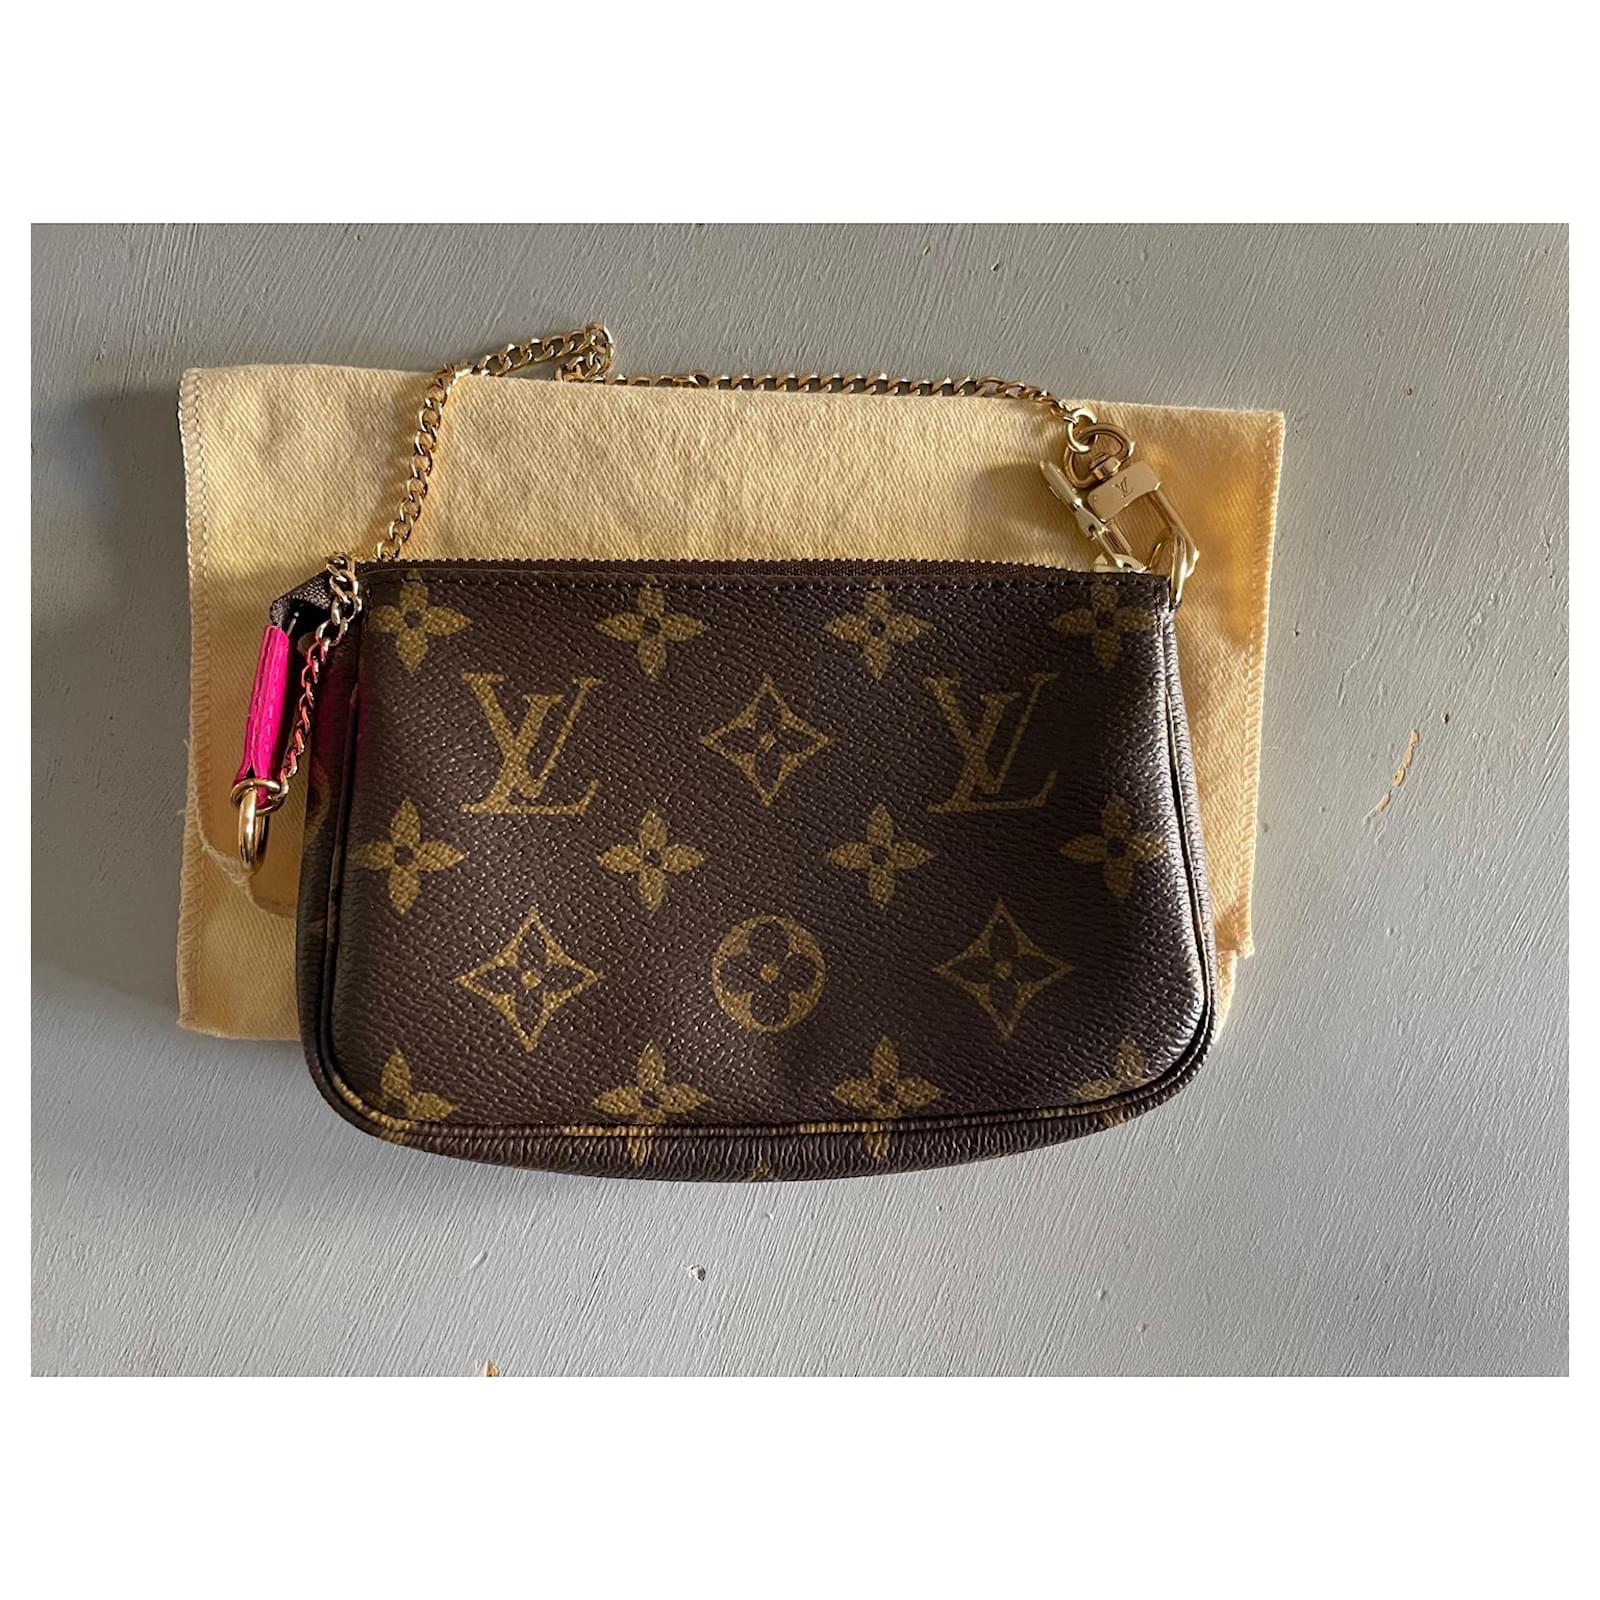 New in Box Louis Vuitton Limited Edition Bears Mini Pouchette Bag